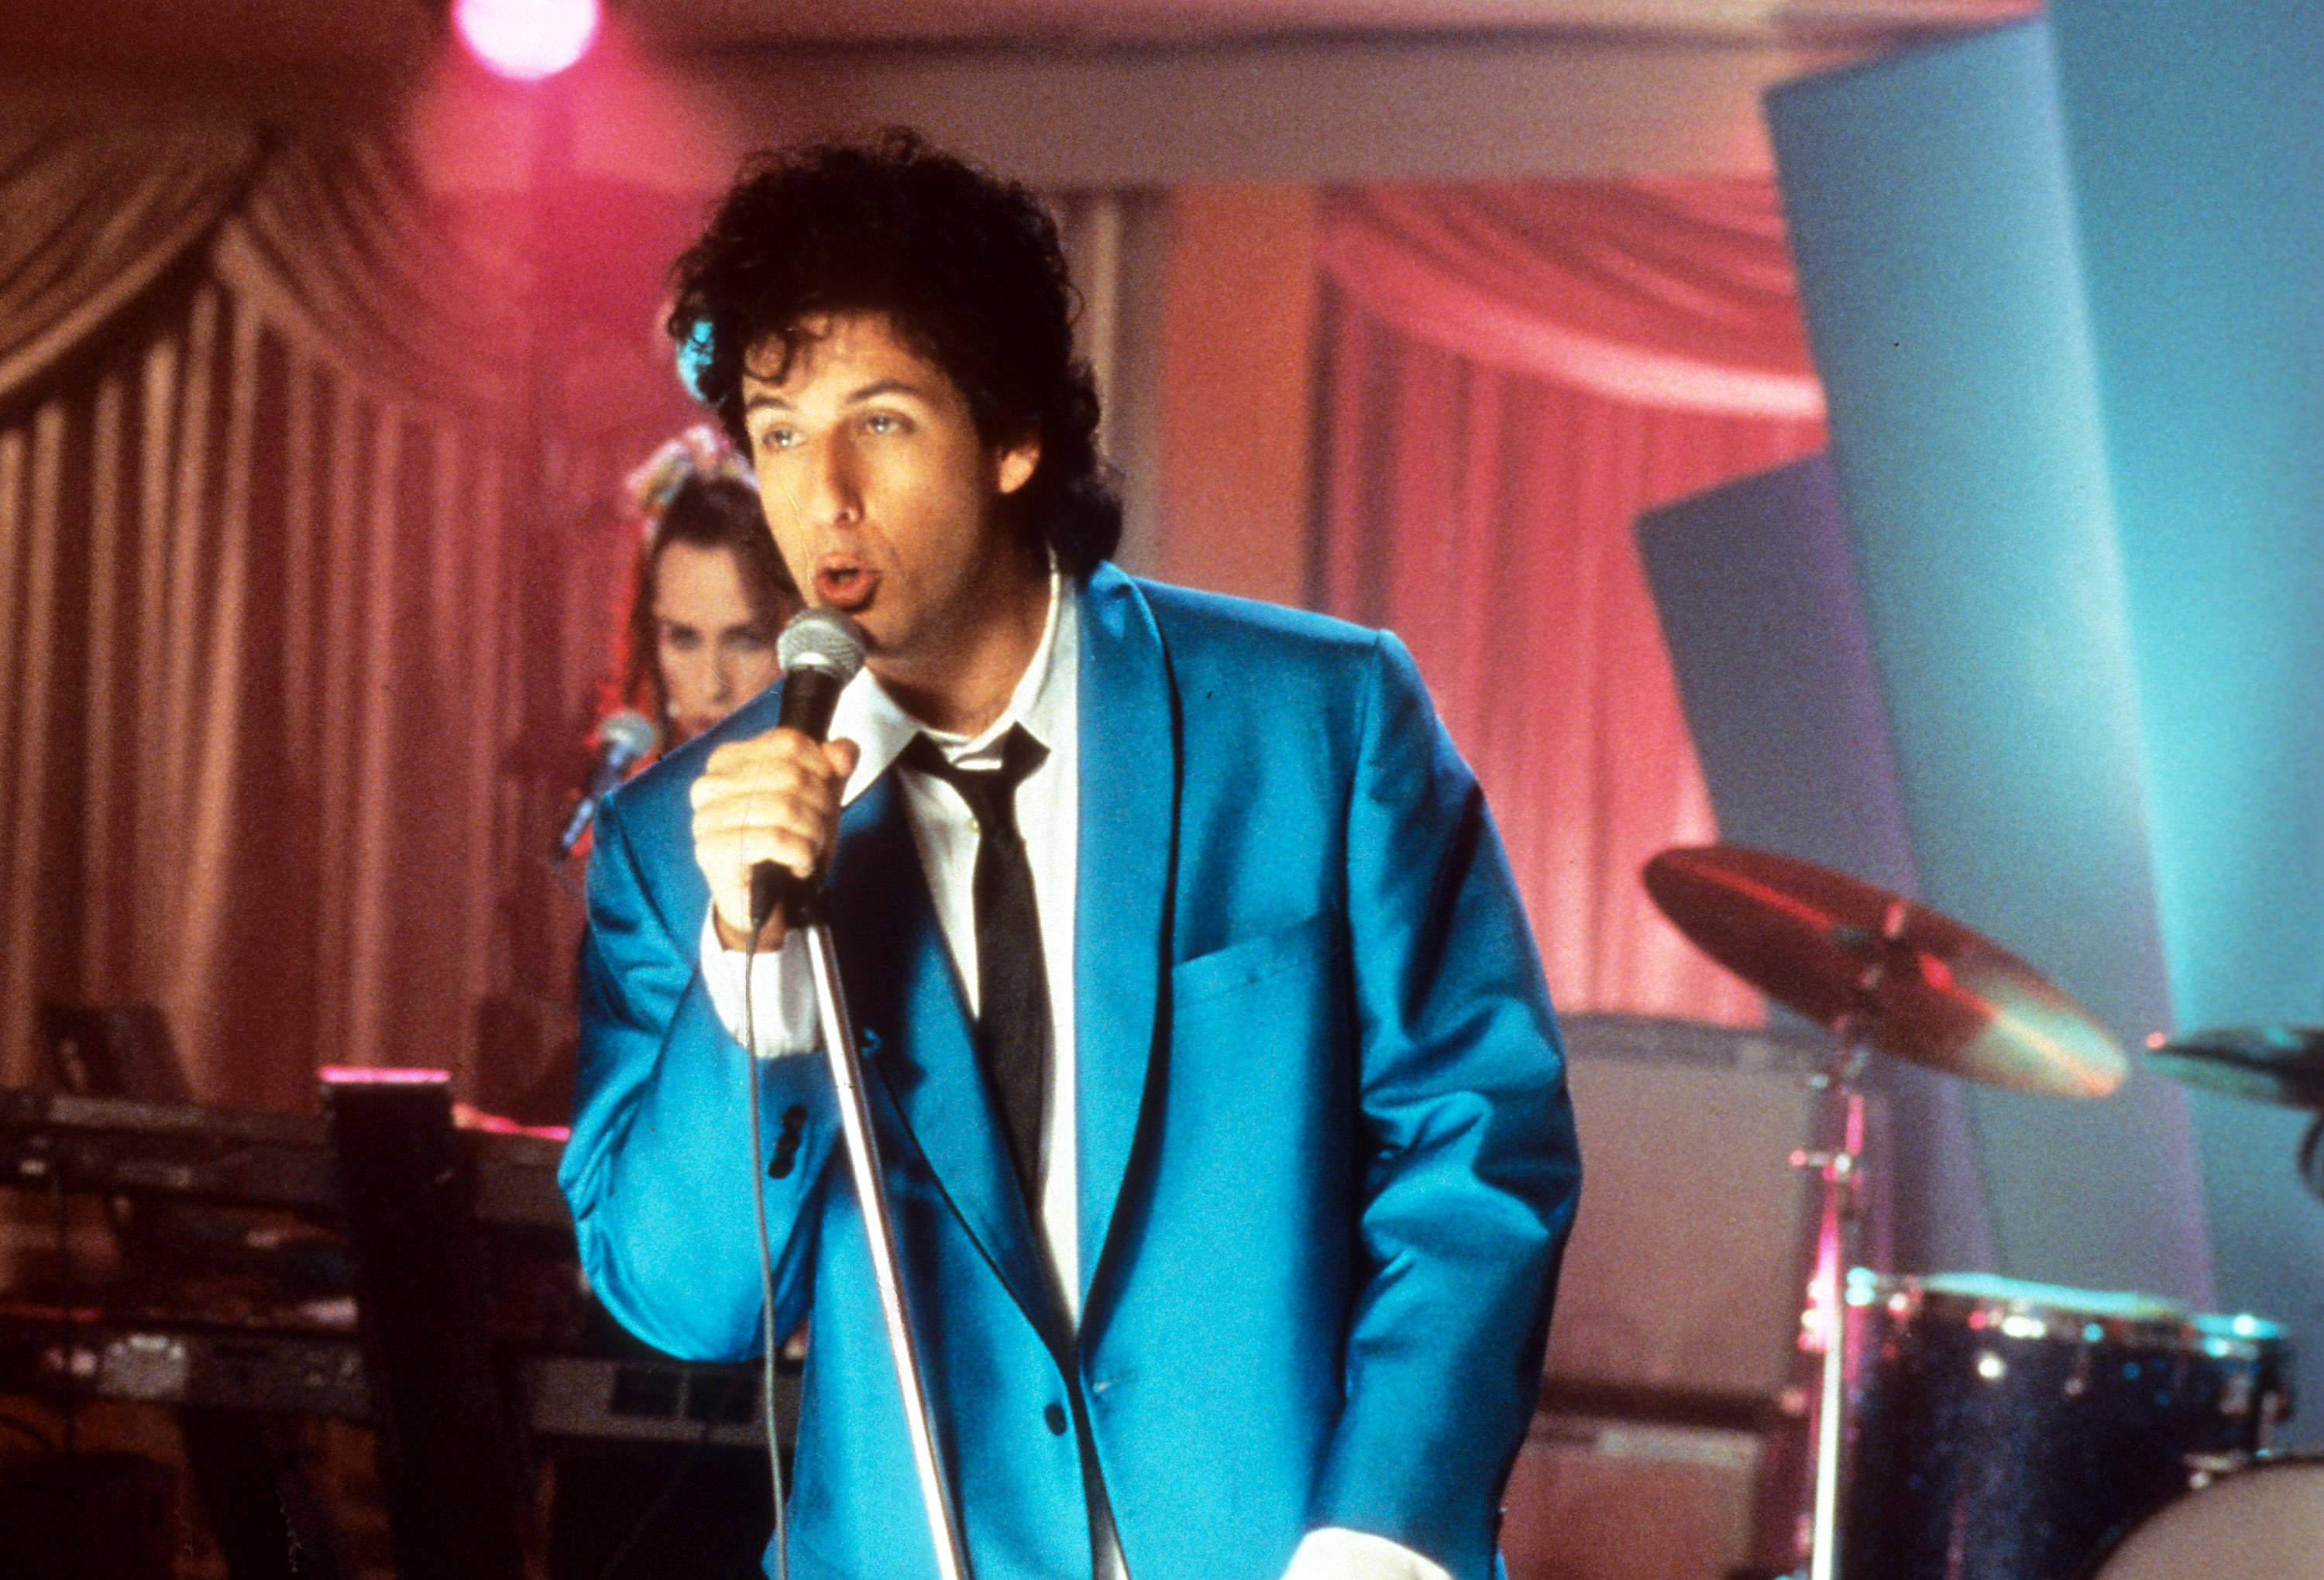 Adam Sandler sings in a scene from the film &#x27;The Wedding Singer&#x27;, 1998